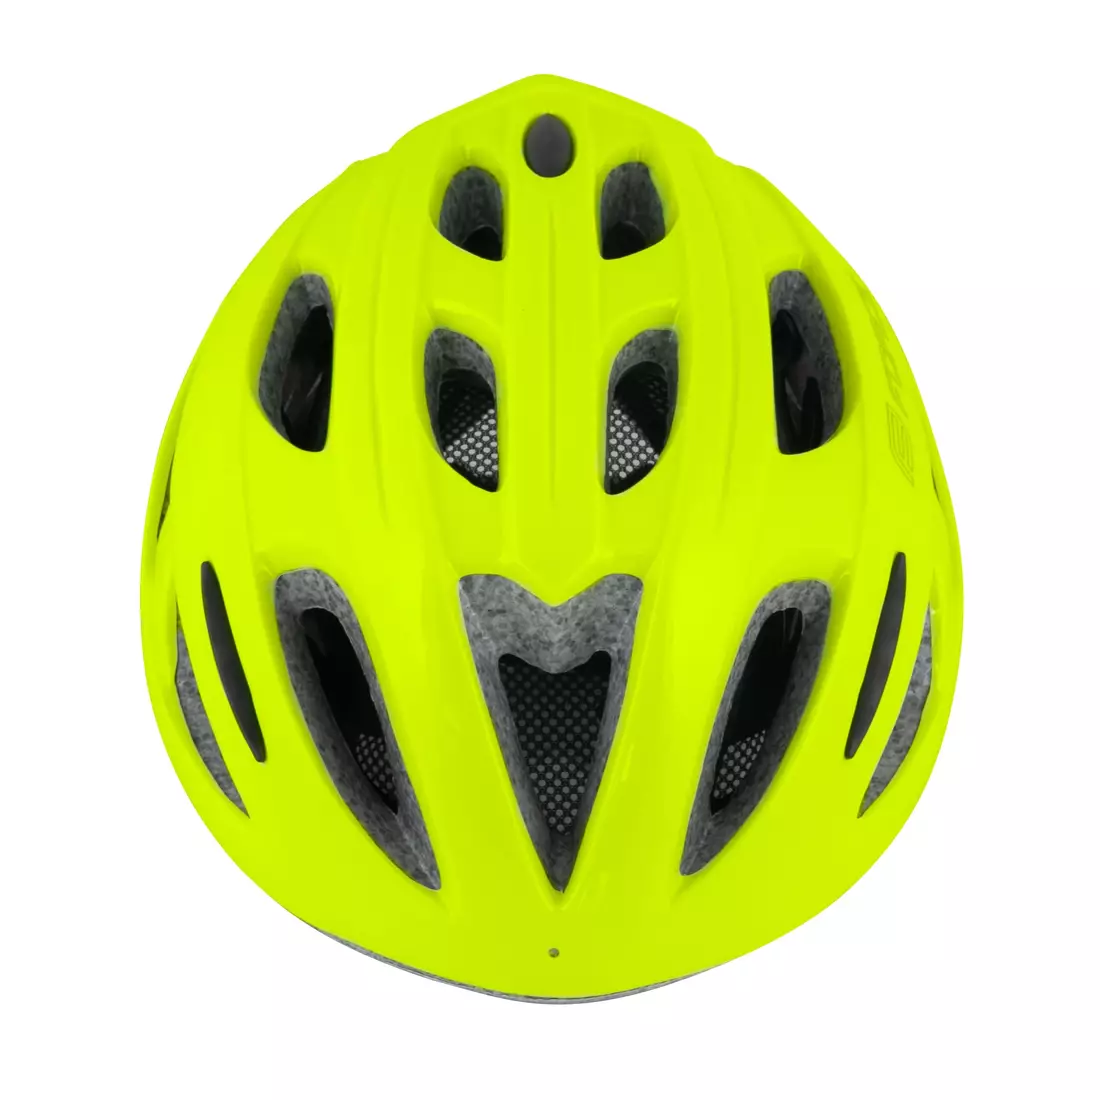 FORCE SWIFT Cyklistická helma fluo 902896